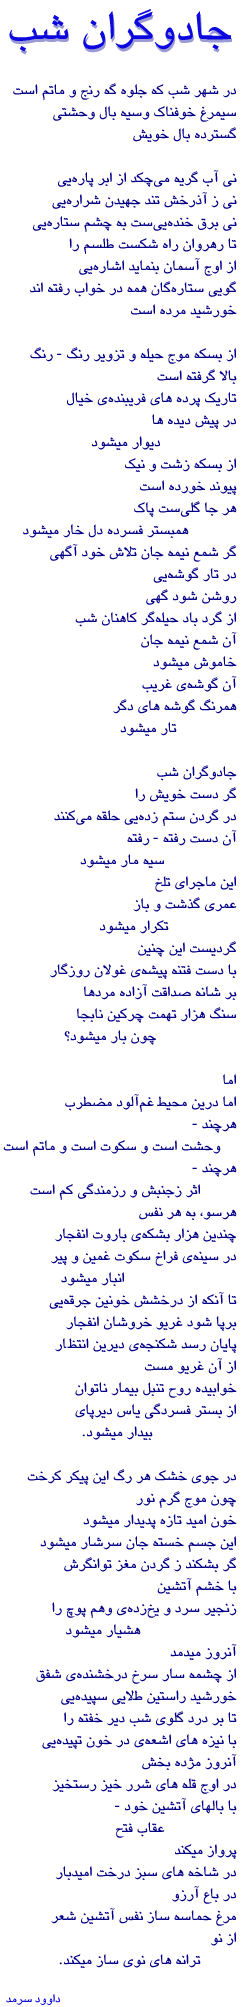 Poem by Dawood Sarmad